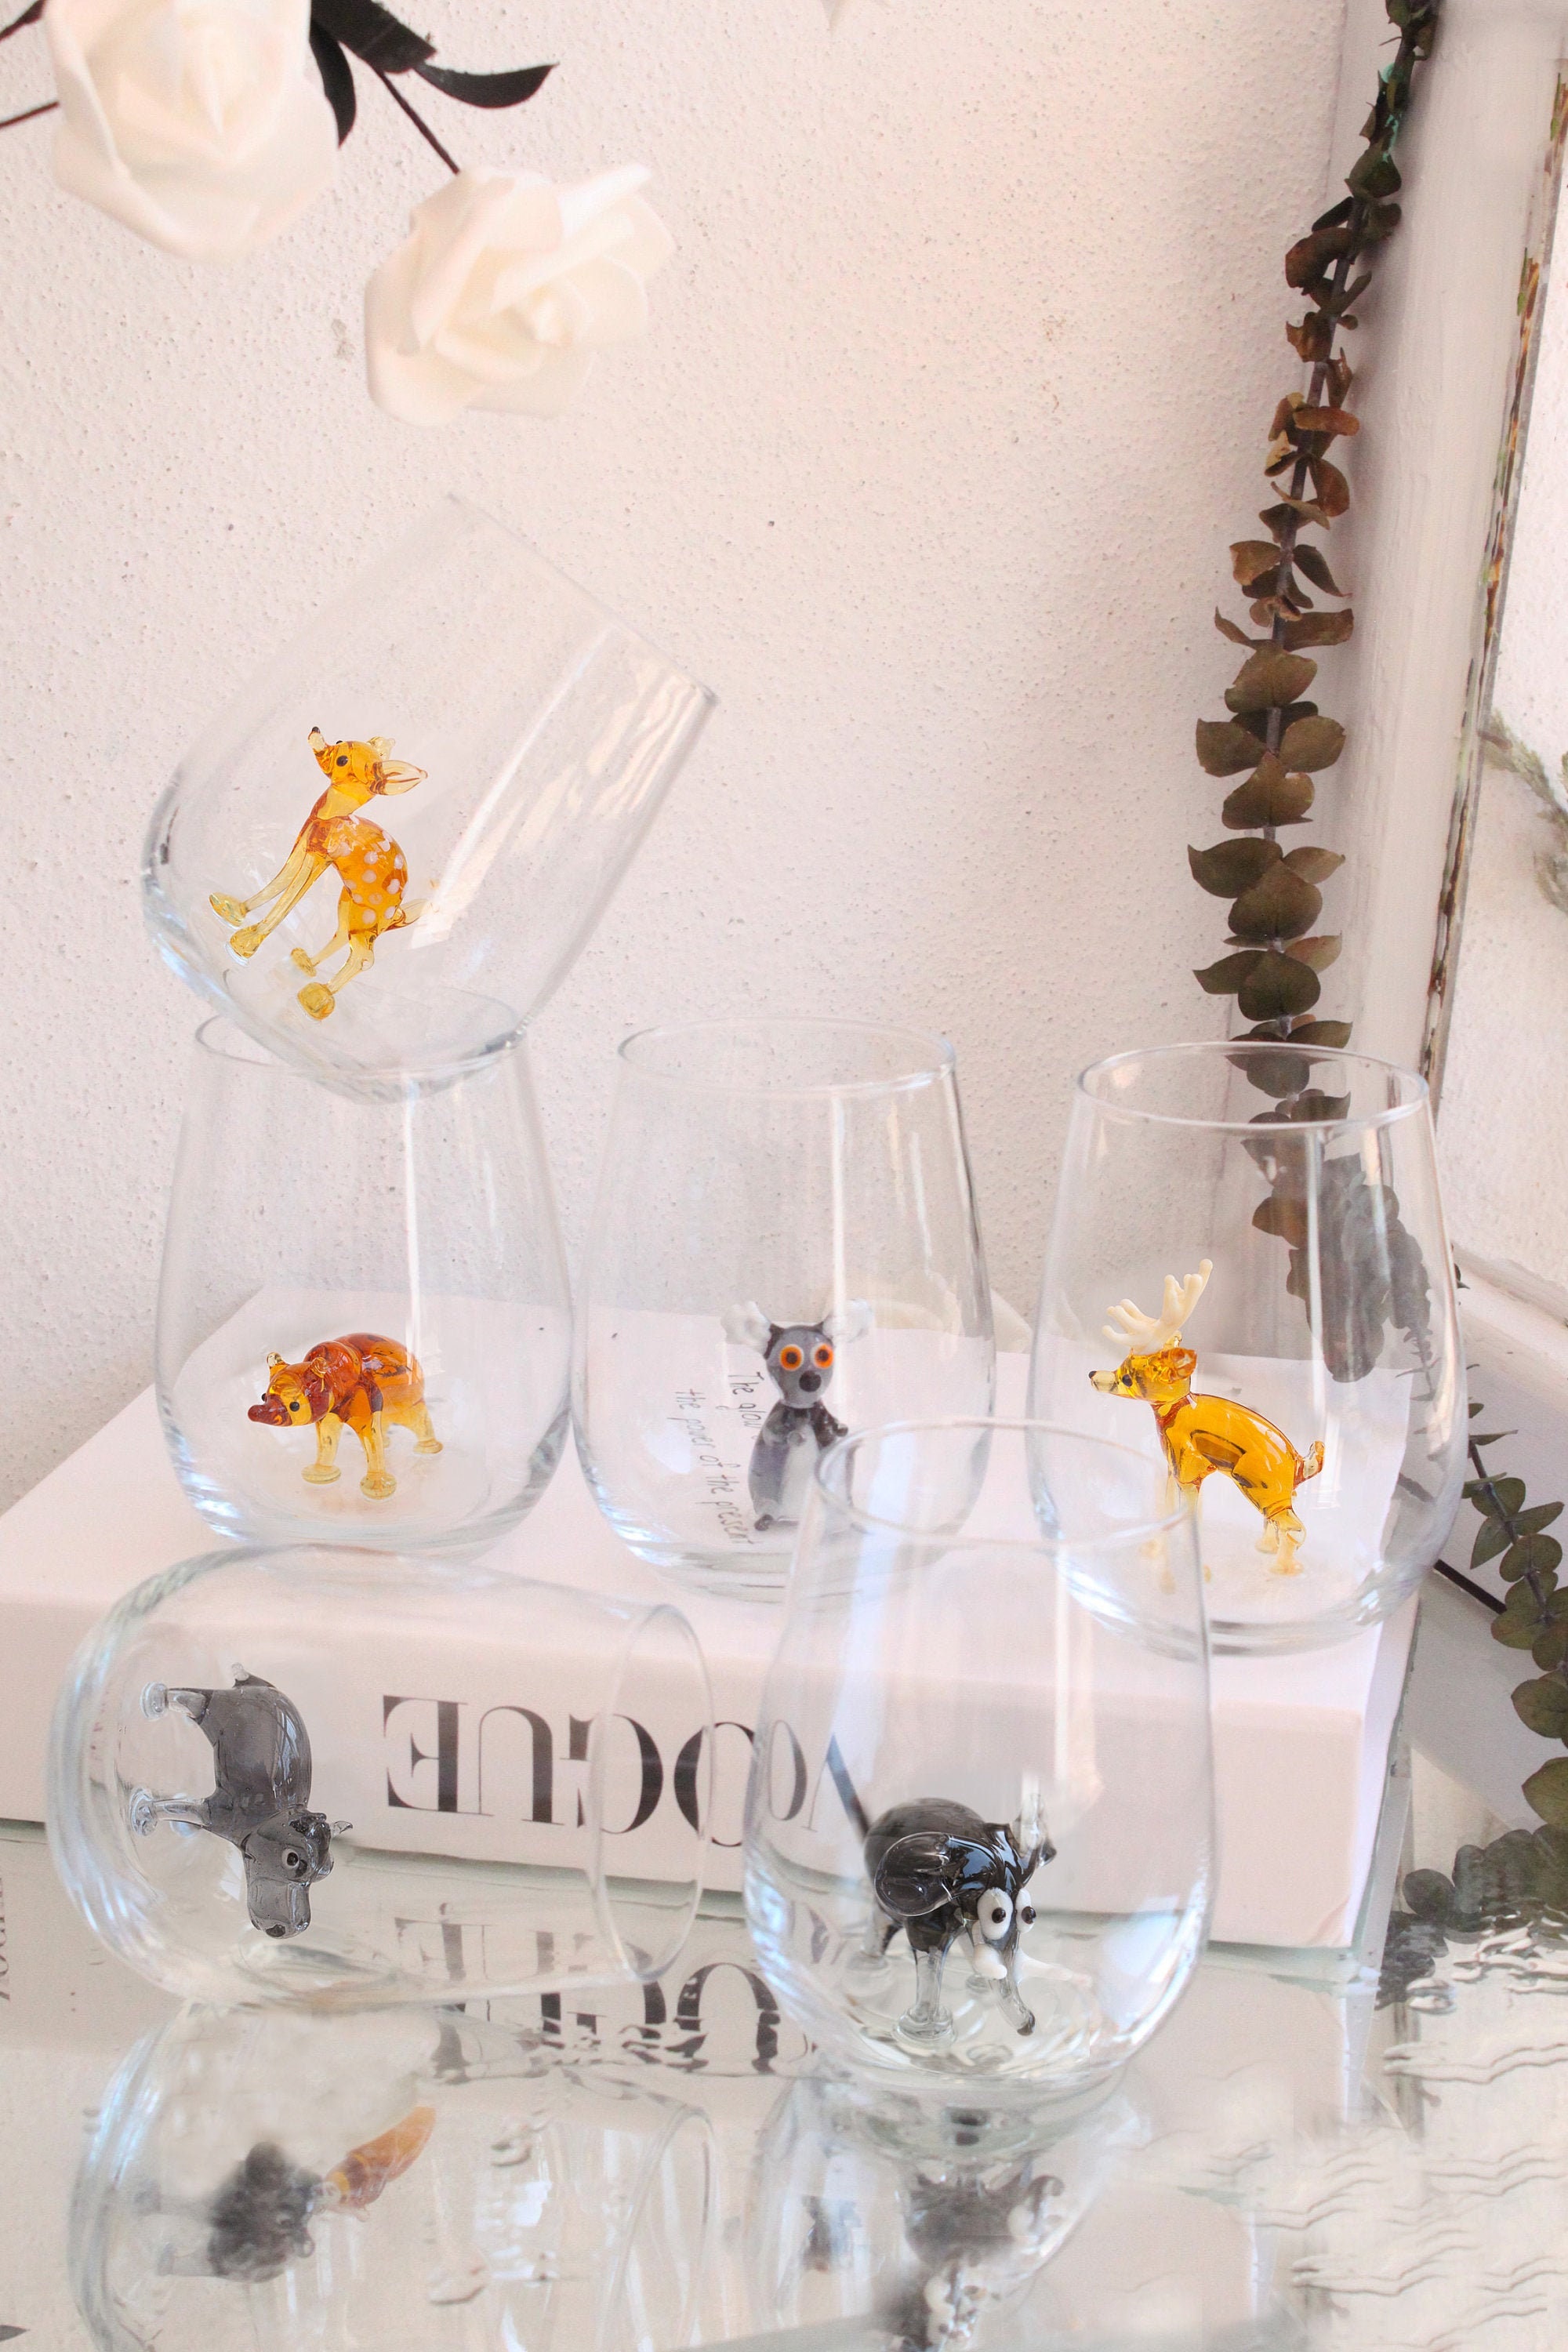 Wine Glass Set of 4 With Animal Figures, Stemless Wine Glass, Pig, Koala,  Dog, Pink Deer, Bambi, Handmade Unique Gifts, Drinkware 